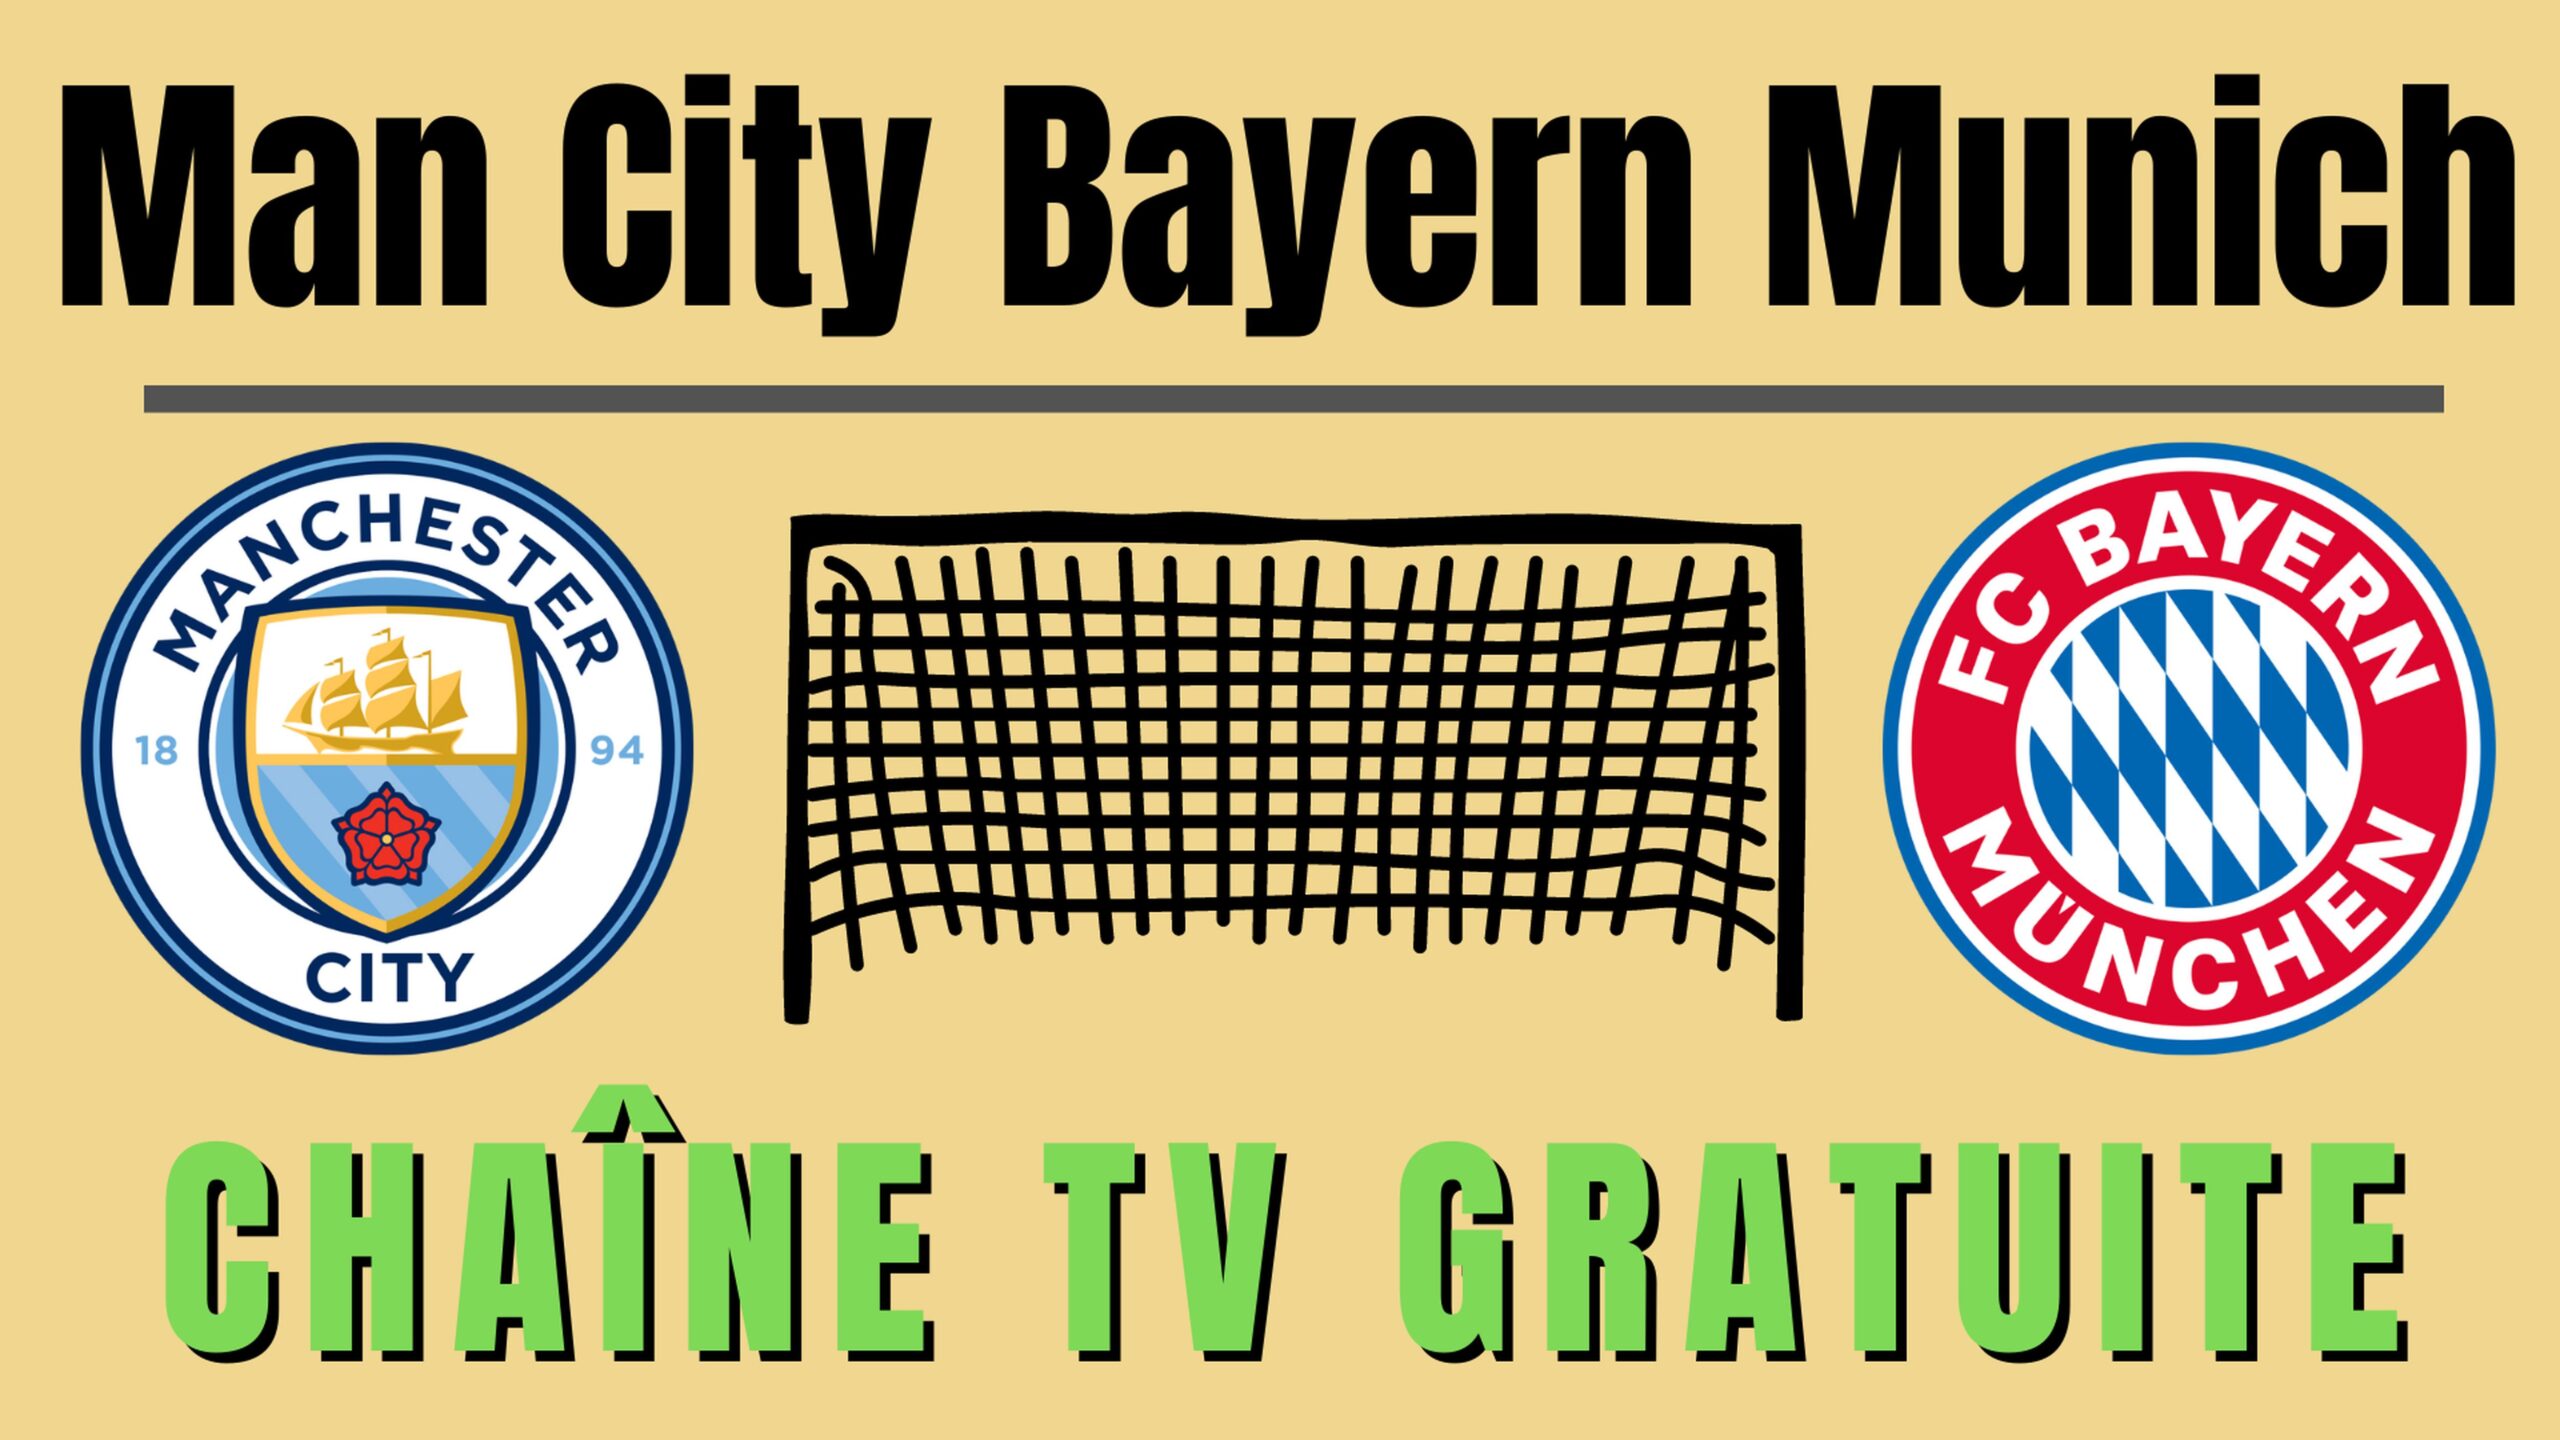 Man City Bayern Munich en streaming sur une chaîne gratuite